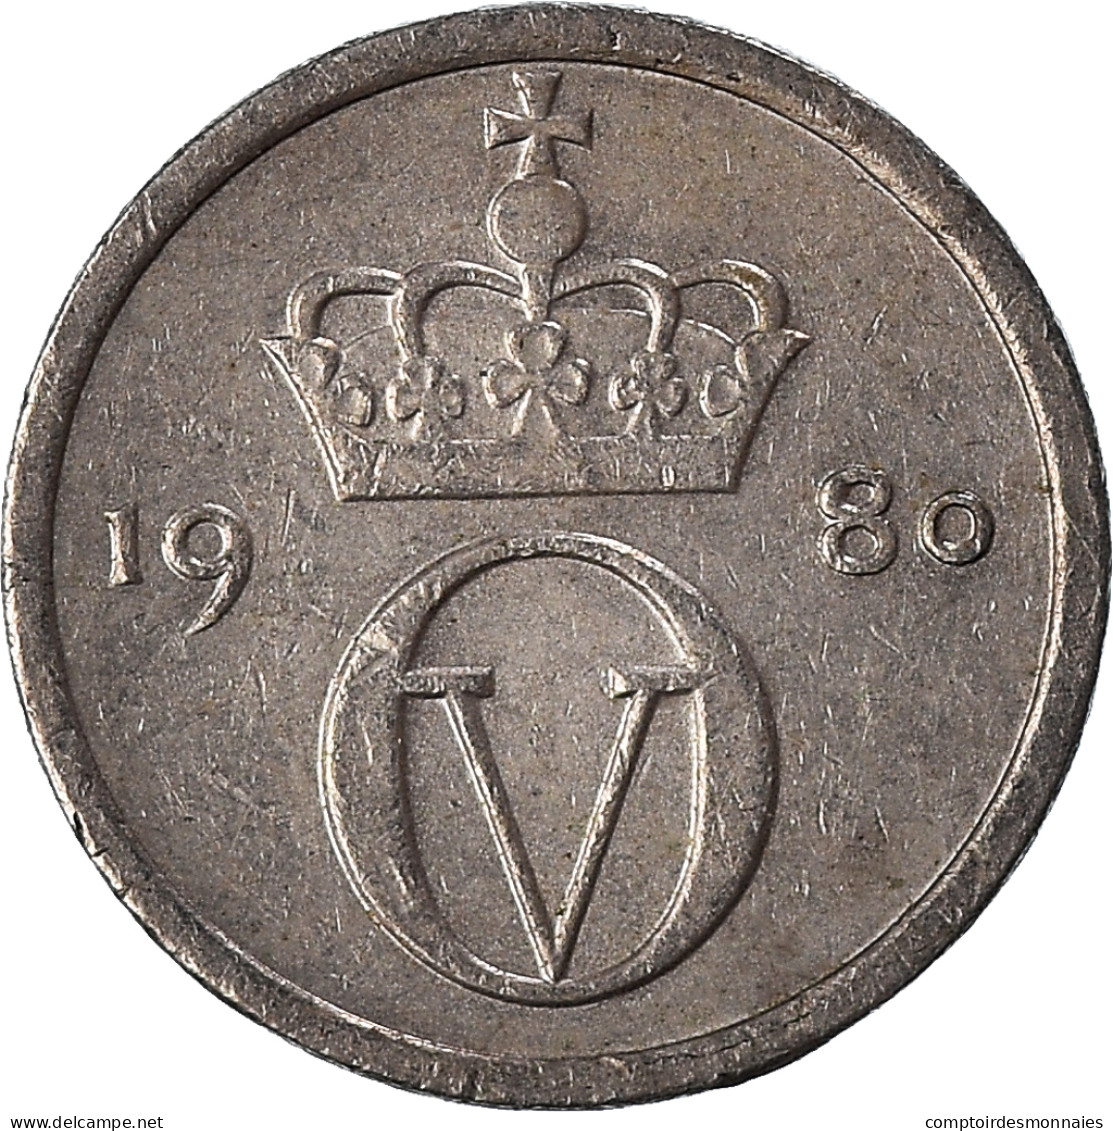 Monnaie, Norvège, 10 Öre, 1980 - Norvège